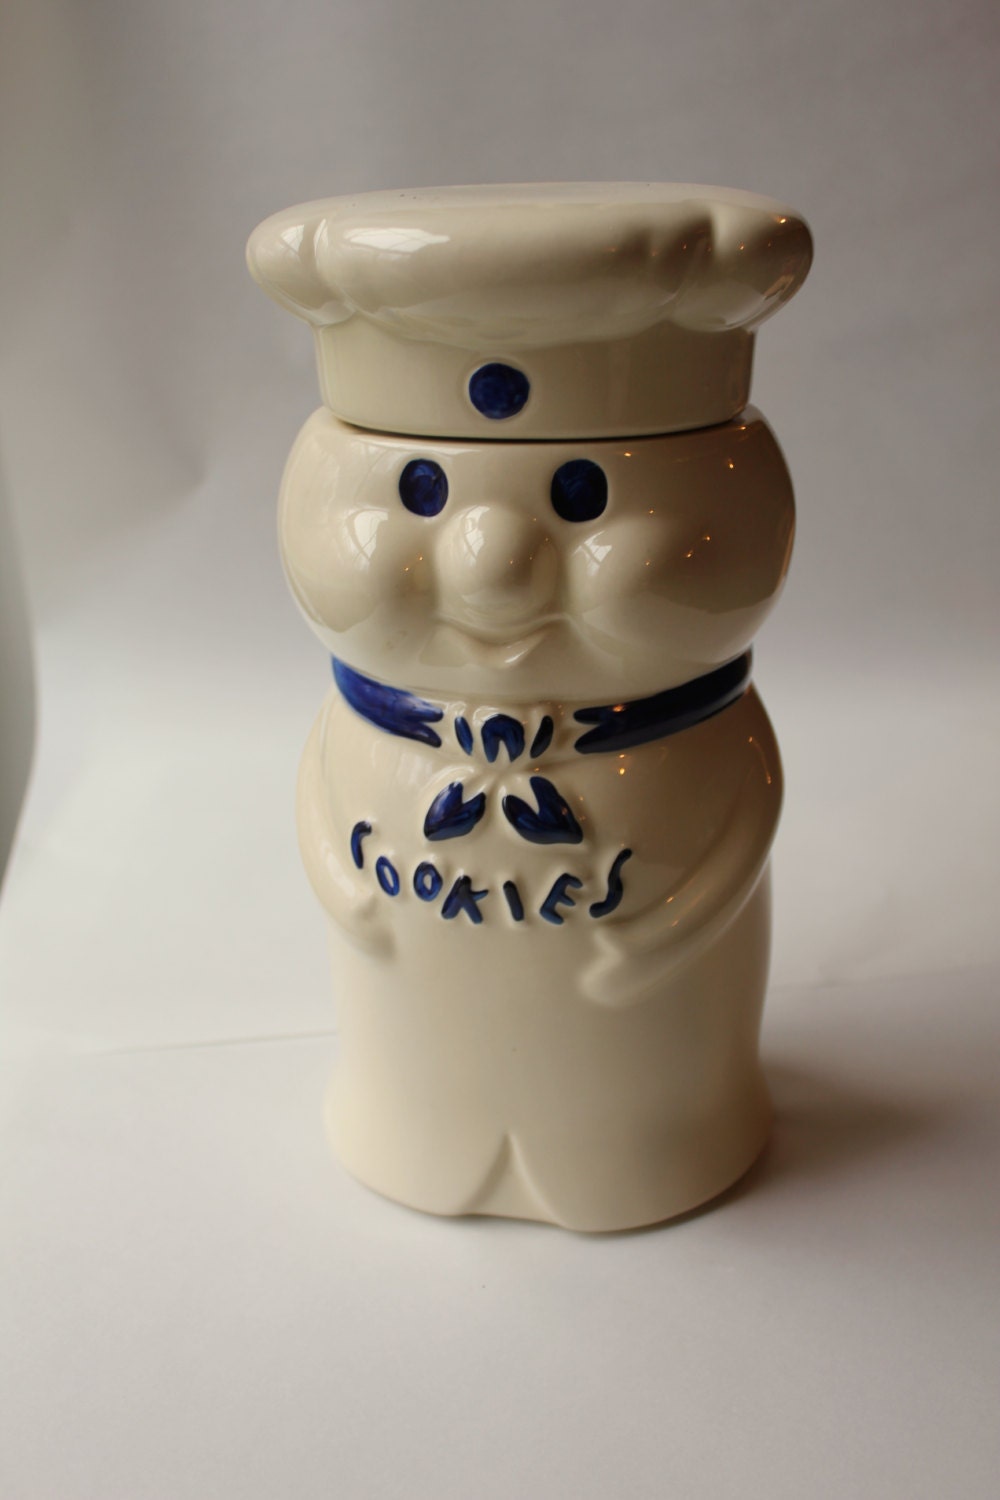 Pillsbury Doughboy Cookie Jar by ScottyinCT on Etsy